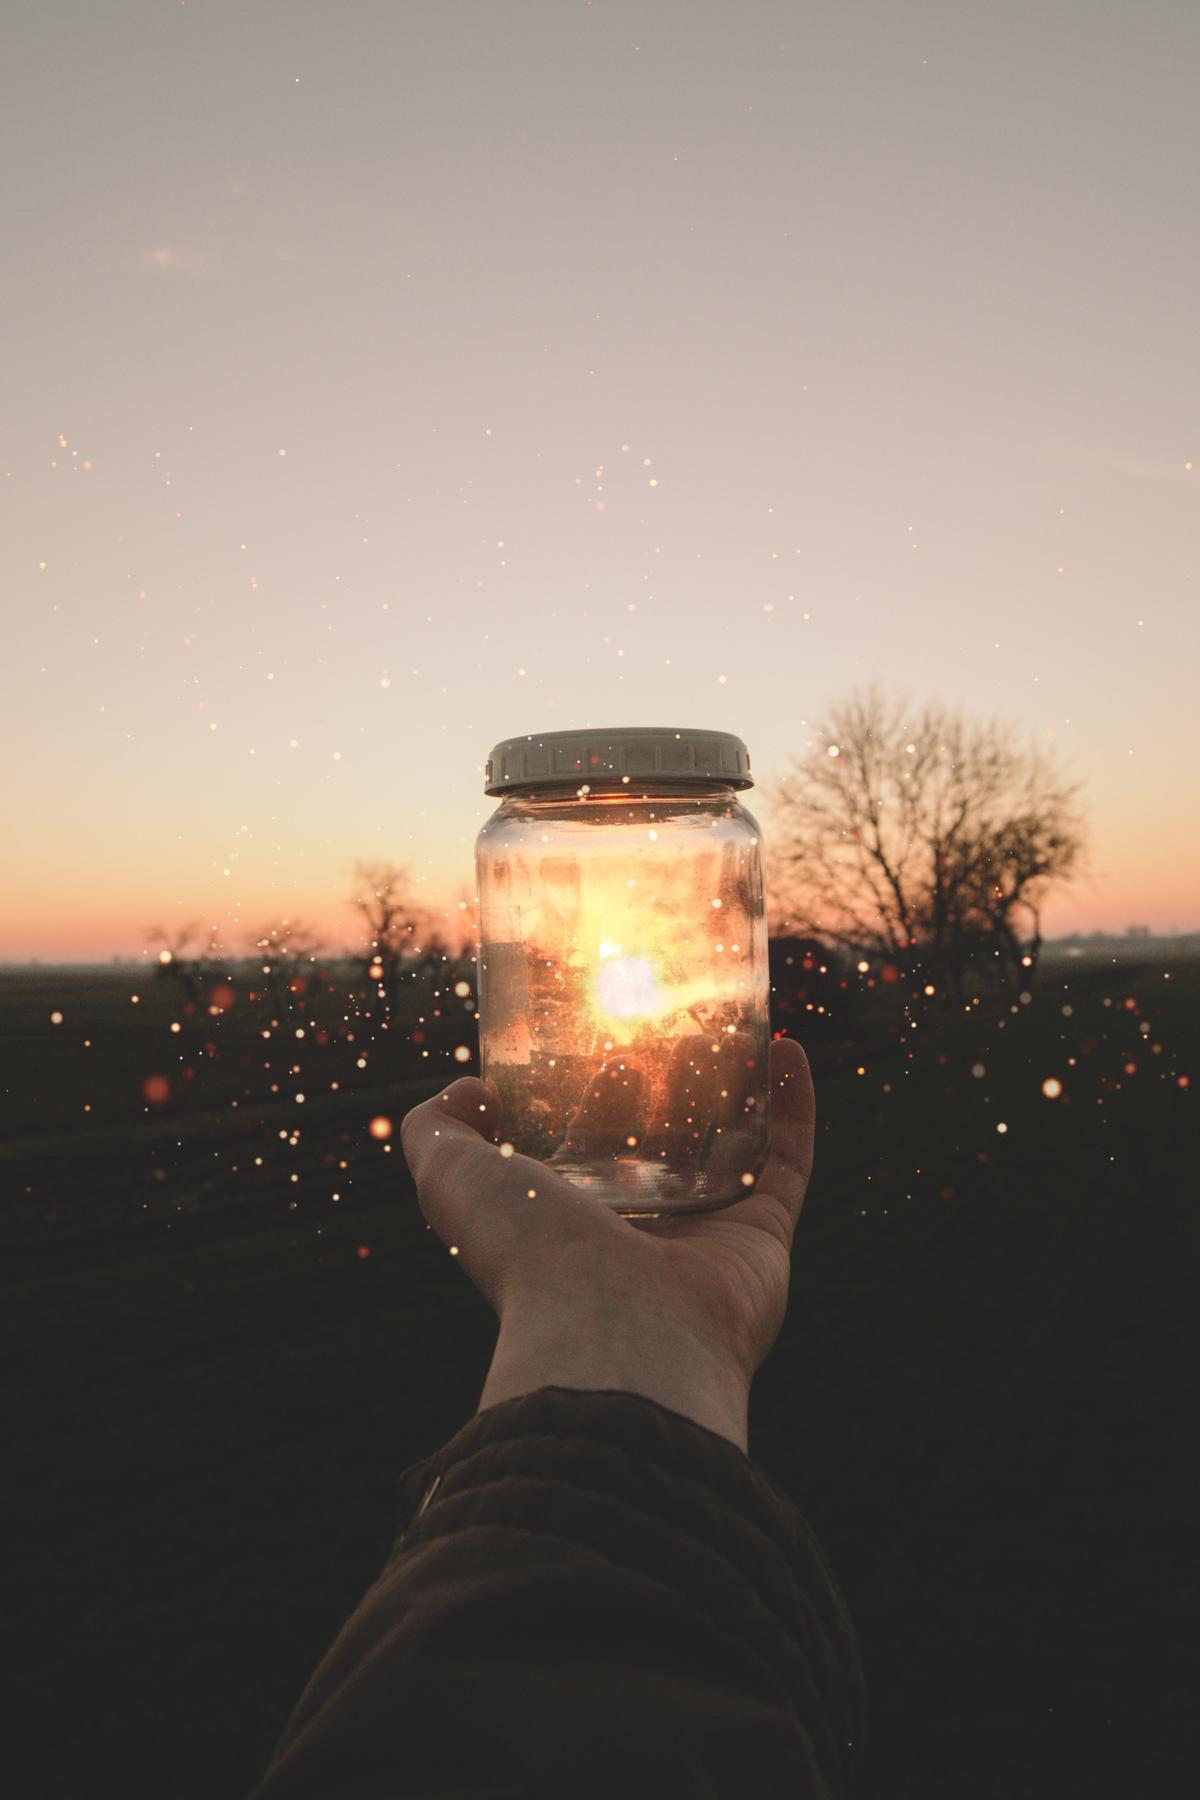 Hand holding a jar full of sparkling light